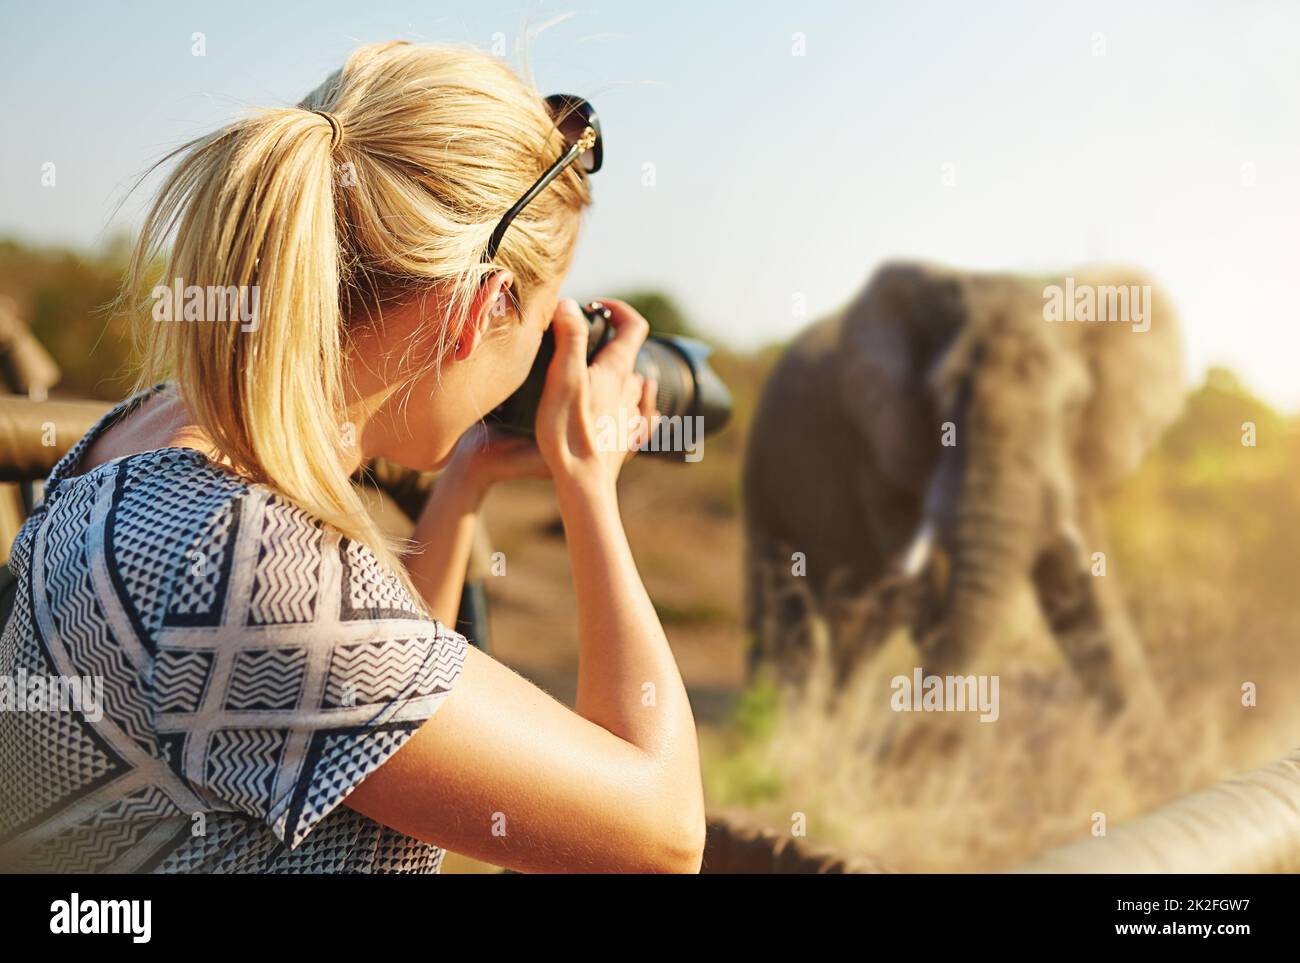 Capturing wildlife. Cropped shot of a female tourist taking photographs of elephants while on safari. Stock Photo